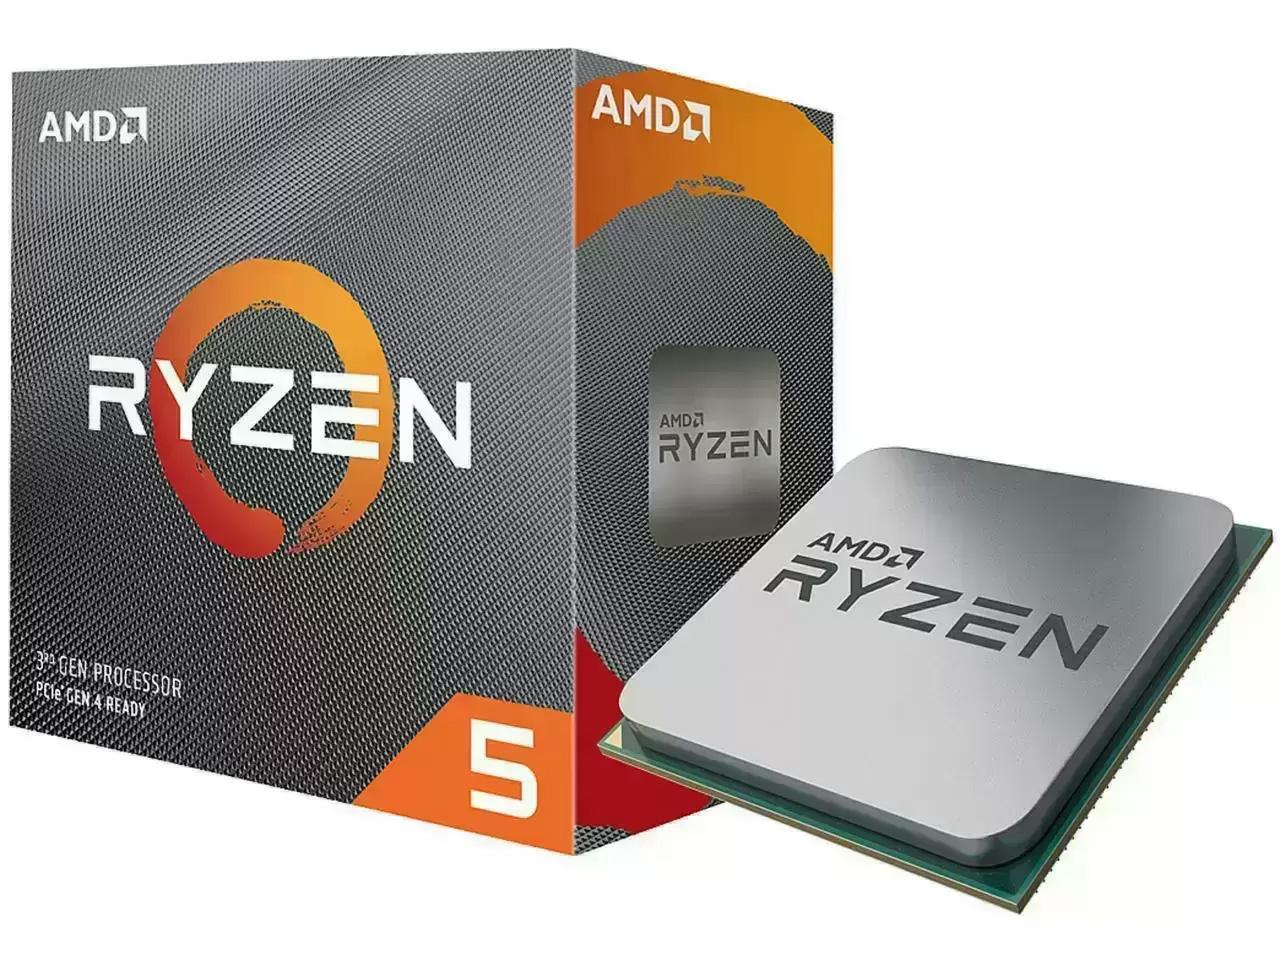 AMD Ryzen 5 3600 6-Core 3.6 GHz AM4 Processor for $154.99 Shipped